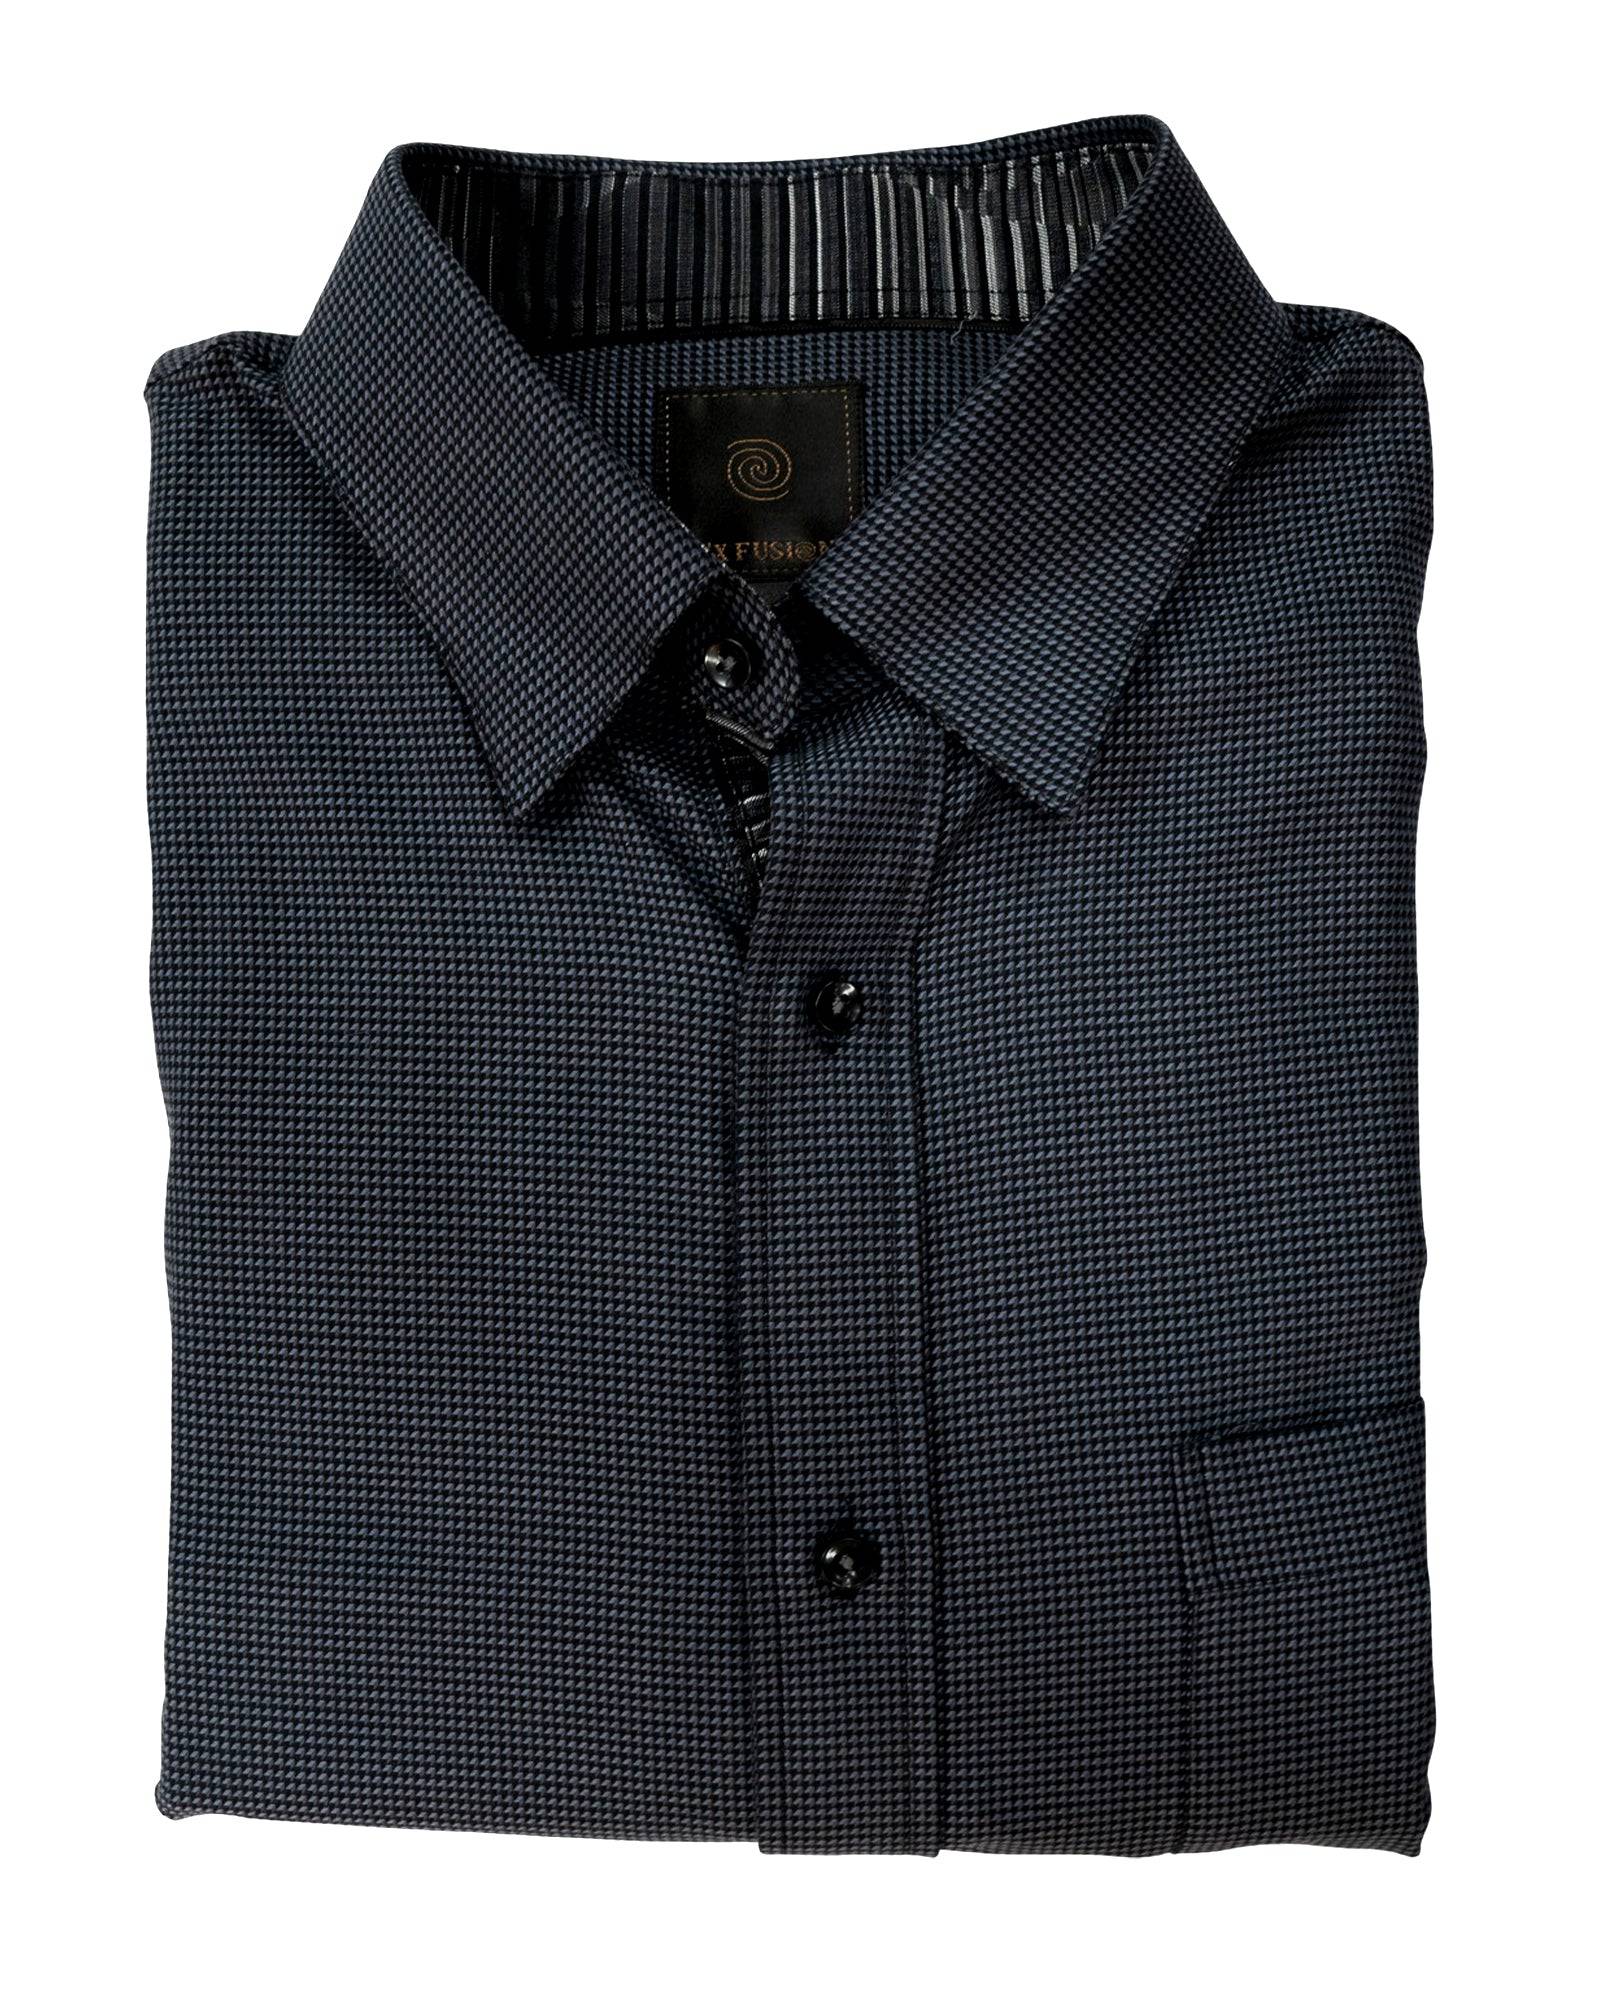 F/X Fusion Grey & Black Neat Check Sport Shirt - Rainwater's Men's Clothing and Tuxedo Rental